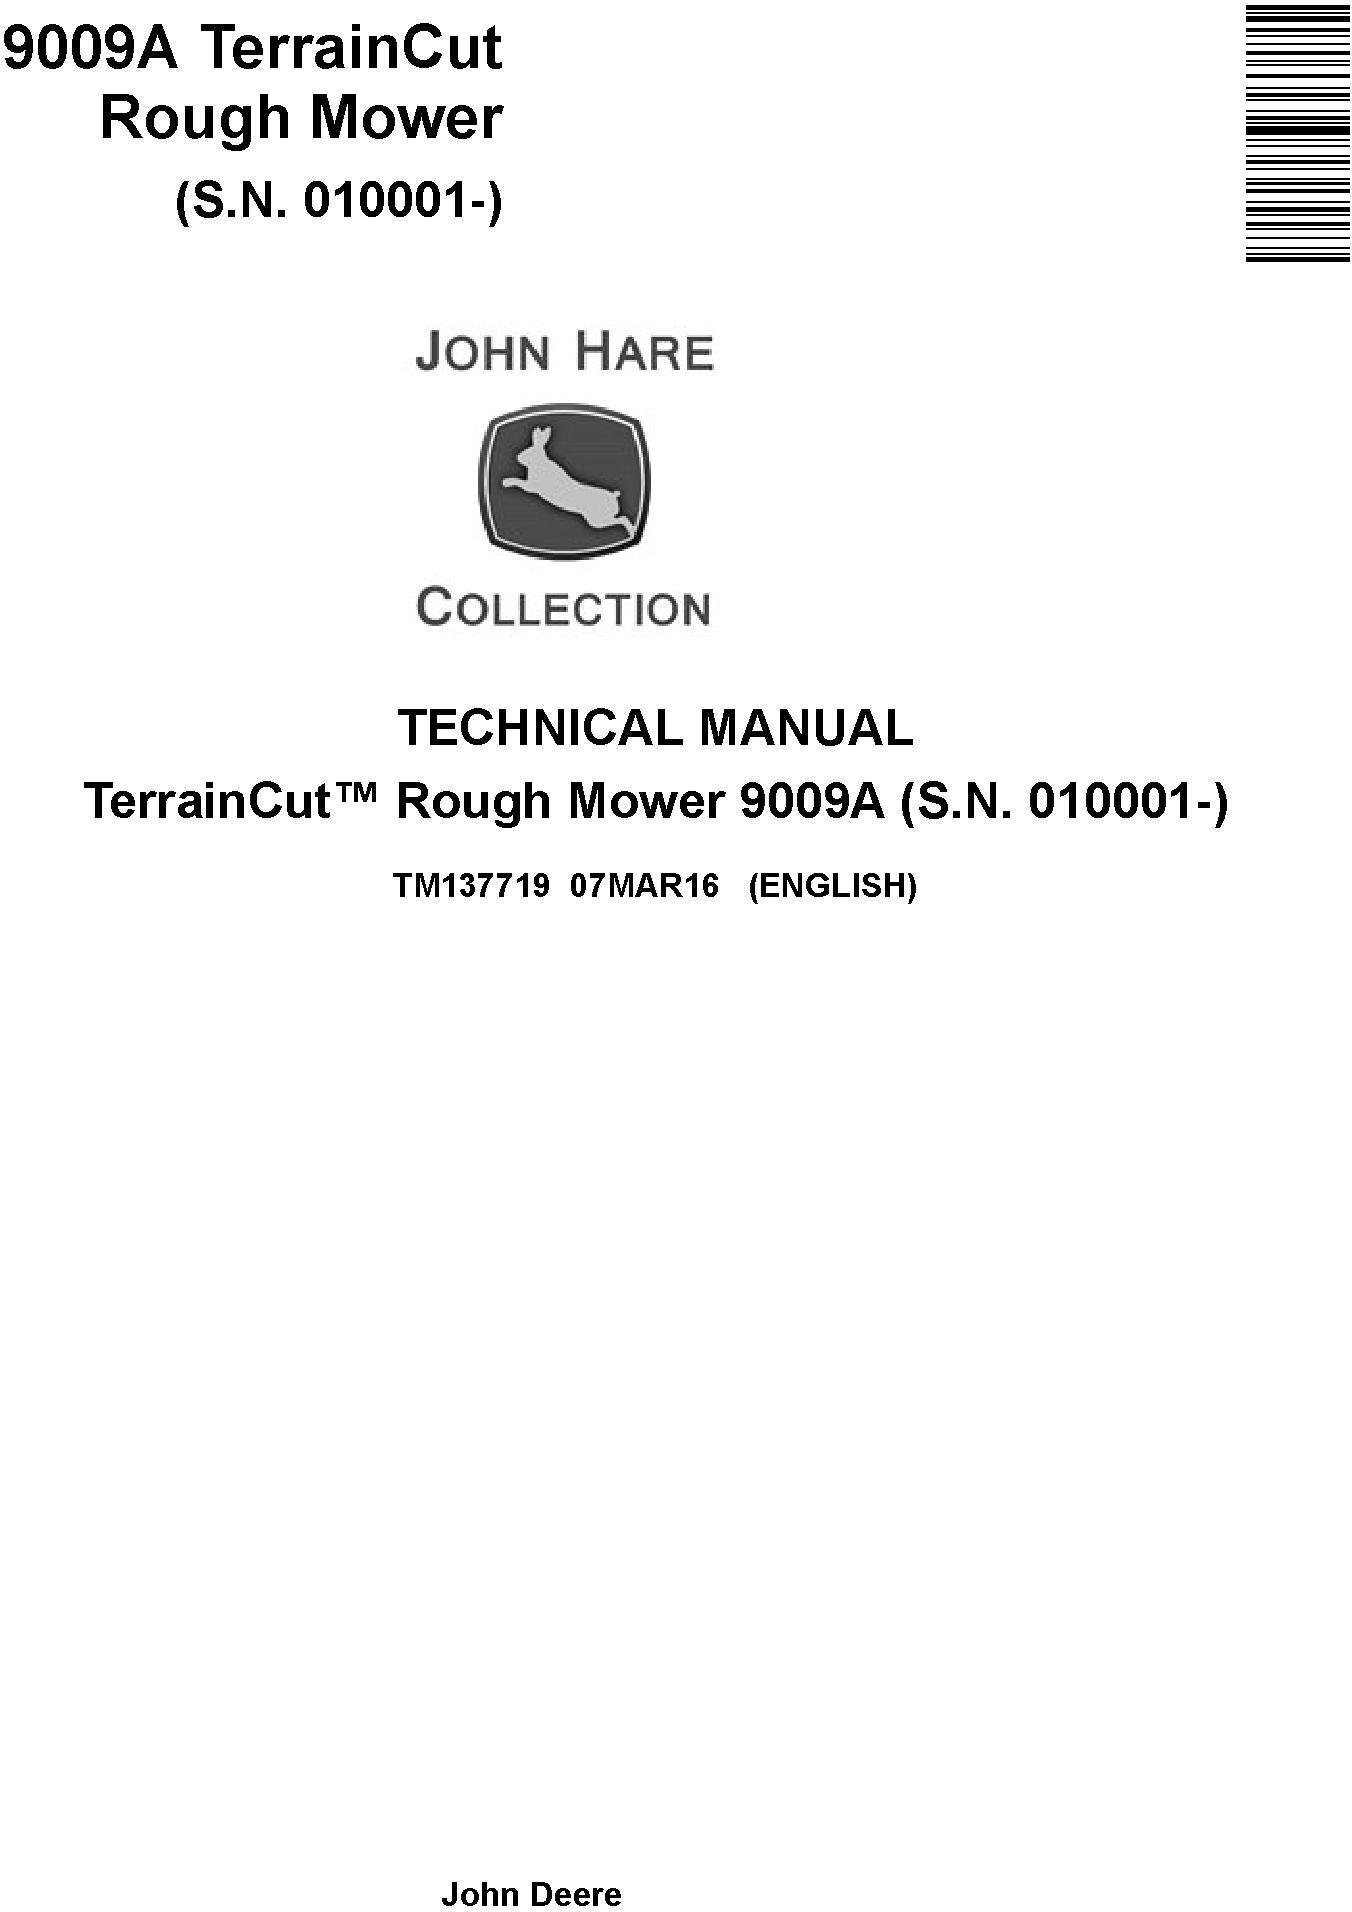 John Deere 9009A TerrainCut Rough Mower Technical Manual TM137719